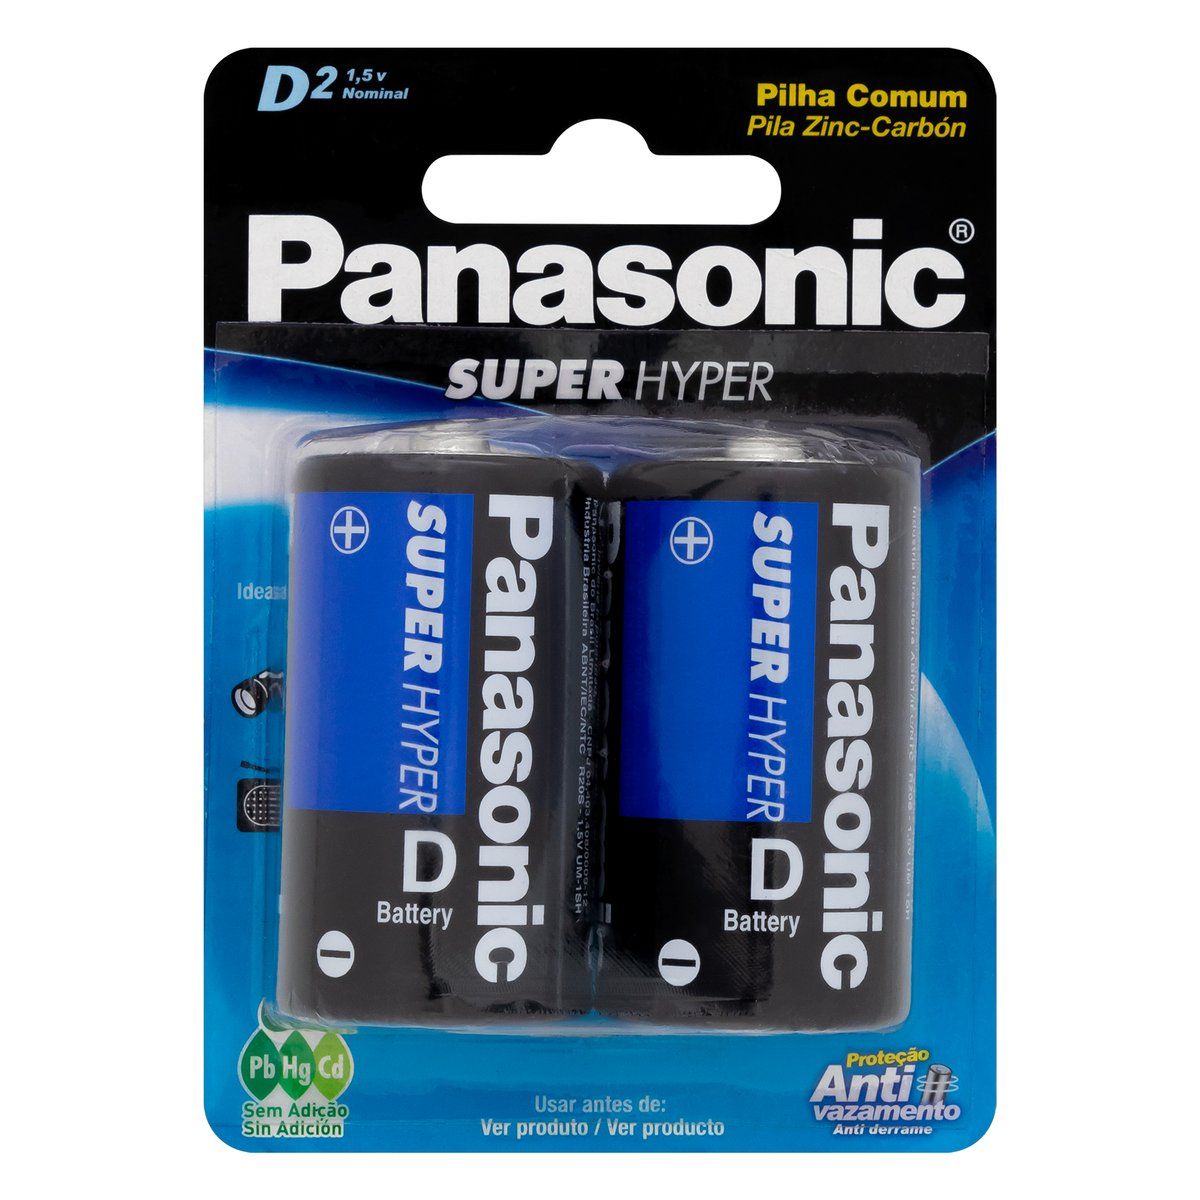 Pilha Comum D Panasonic Super Hyper Grande 2 Unidades